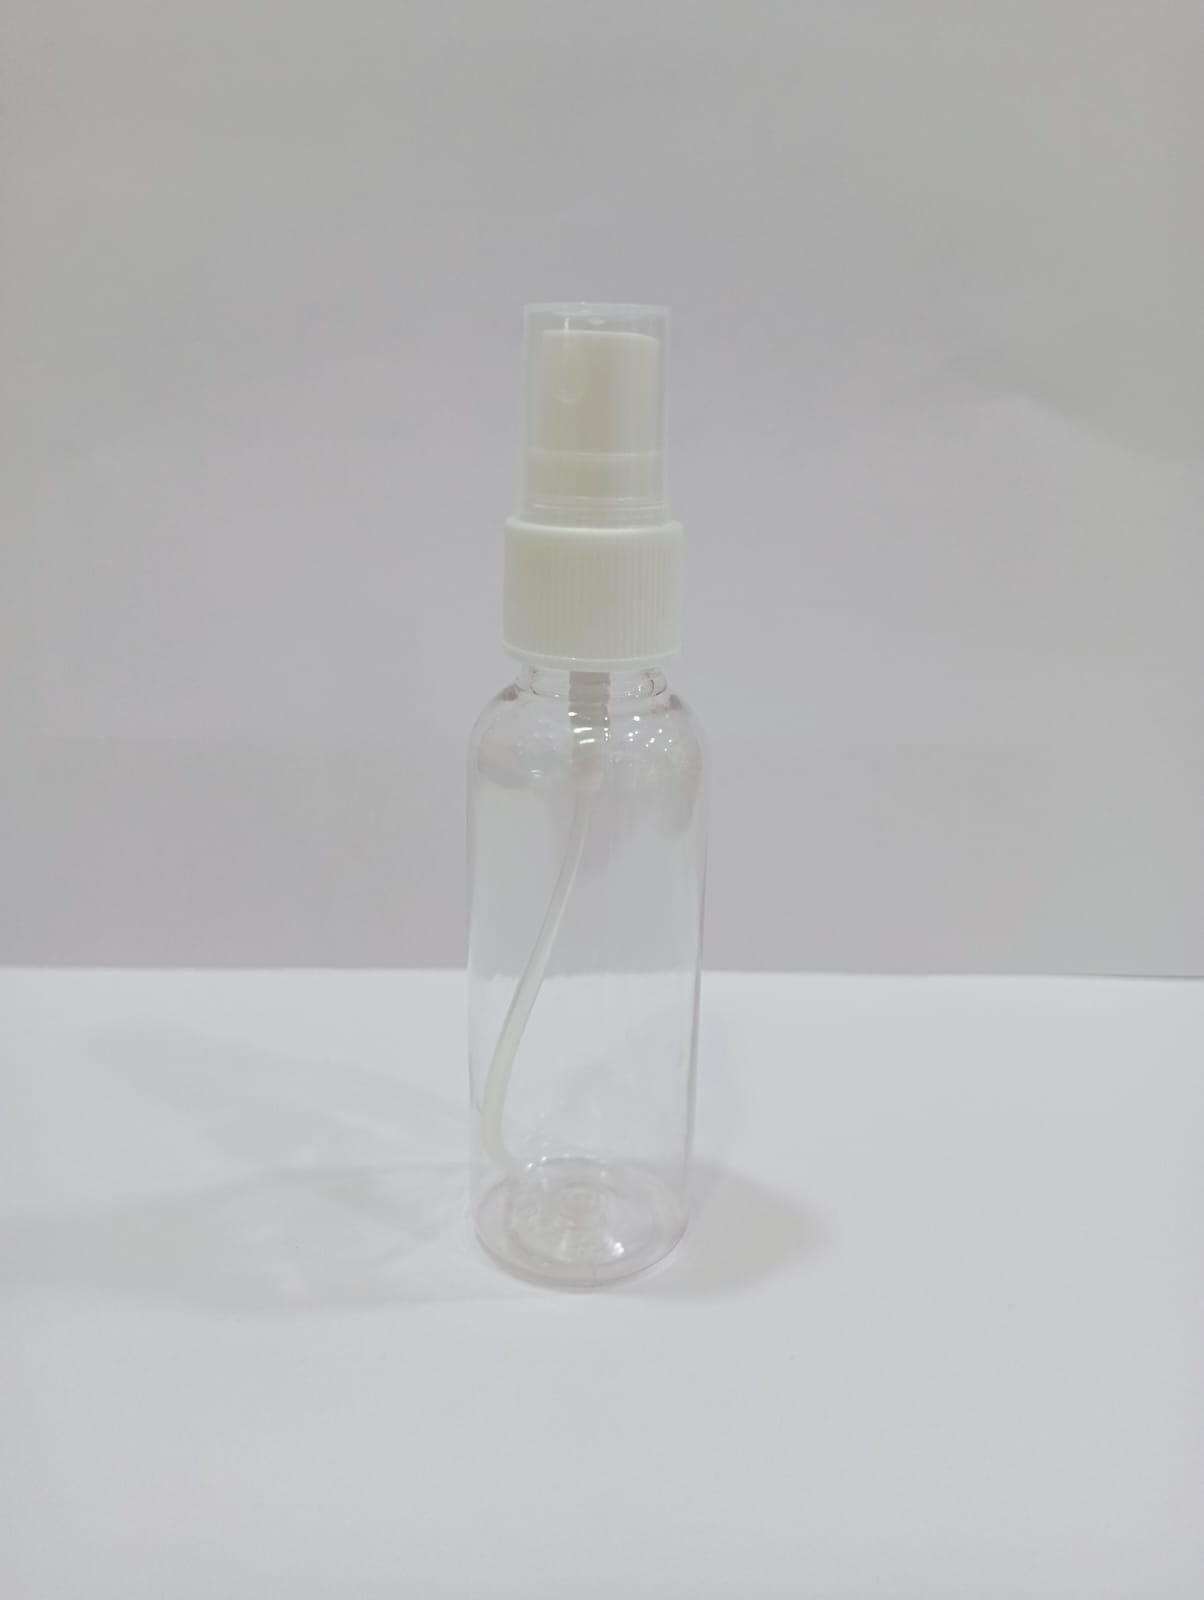 50ml pet spray bottle